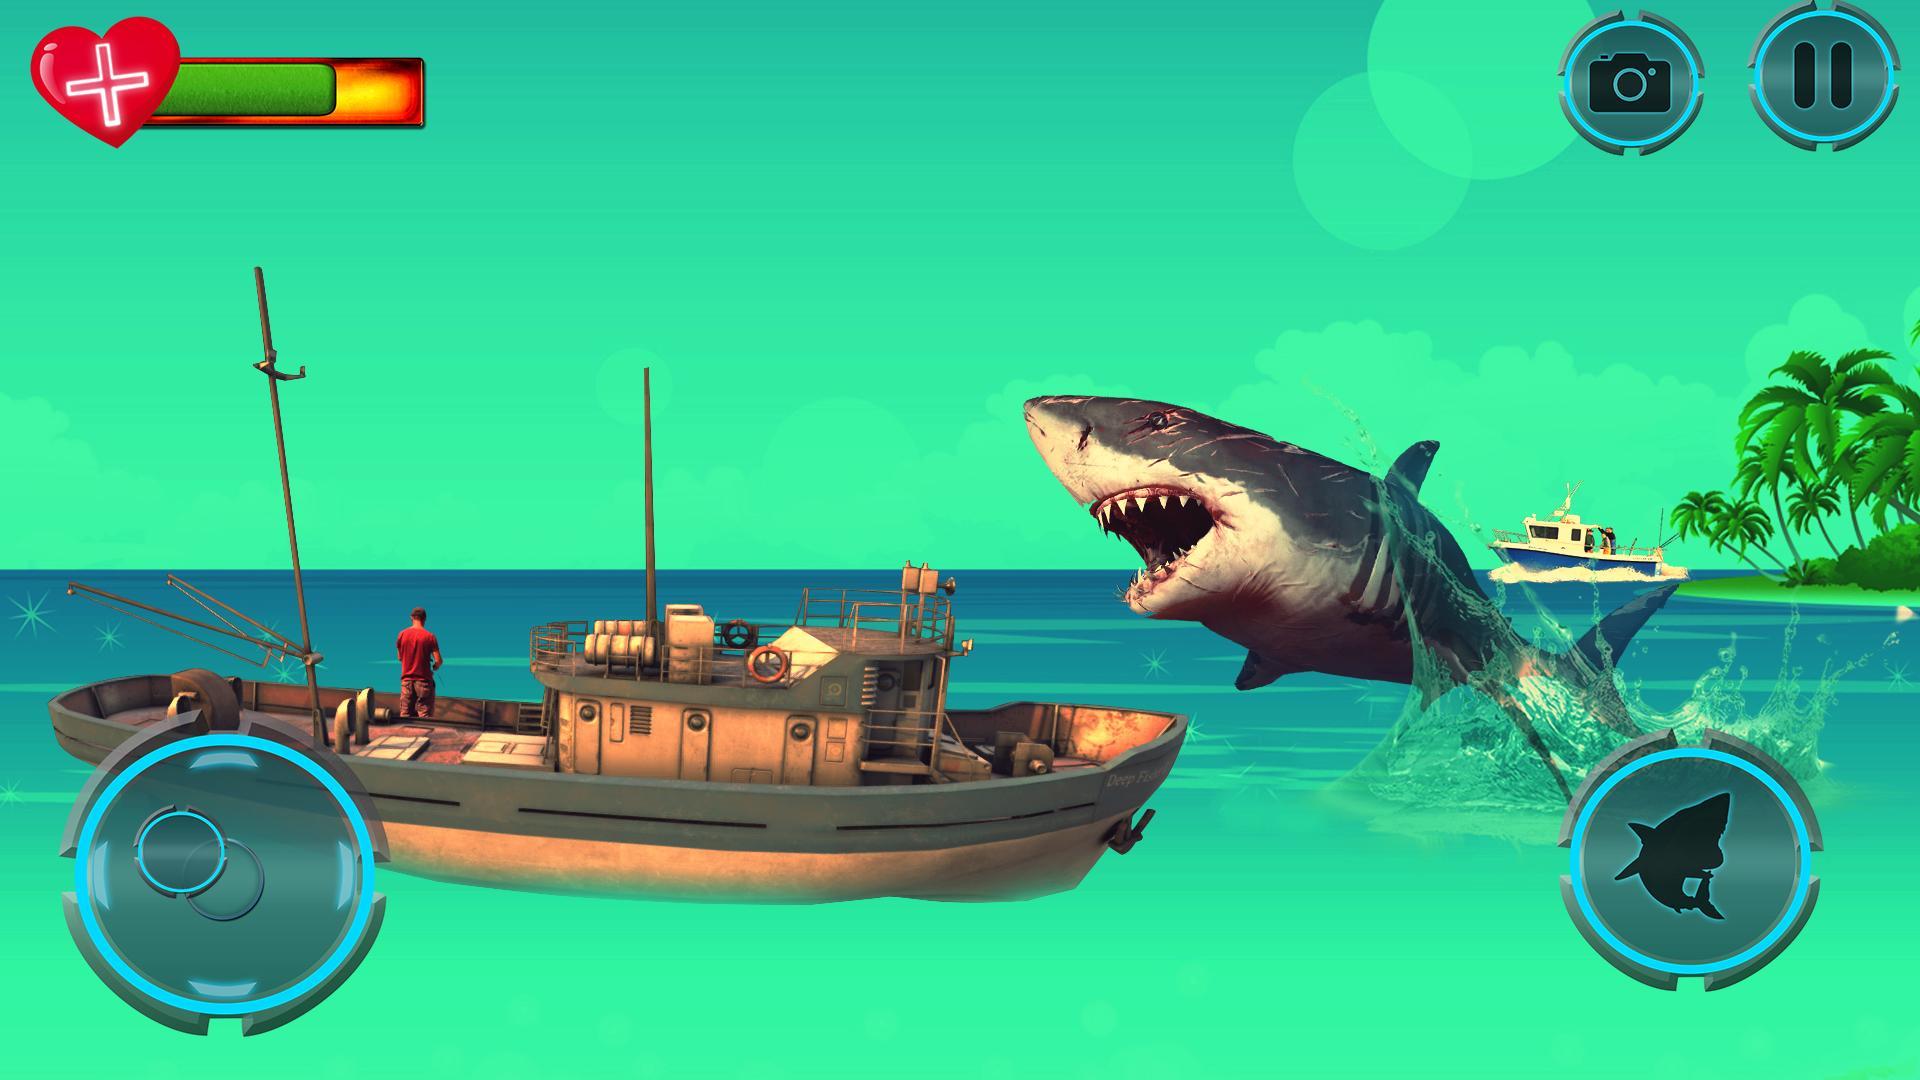 Игра большая акула. Shark 2 игра. Злая акула игра. Игра про акулу на Xbox.